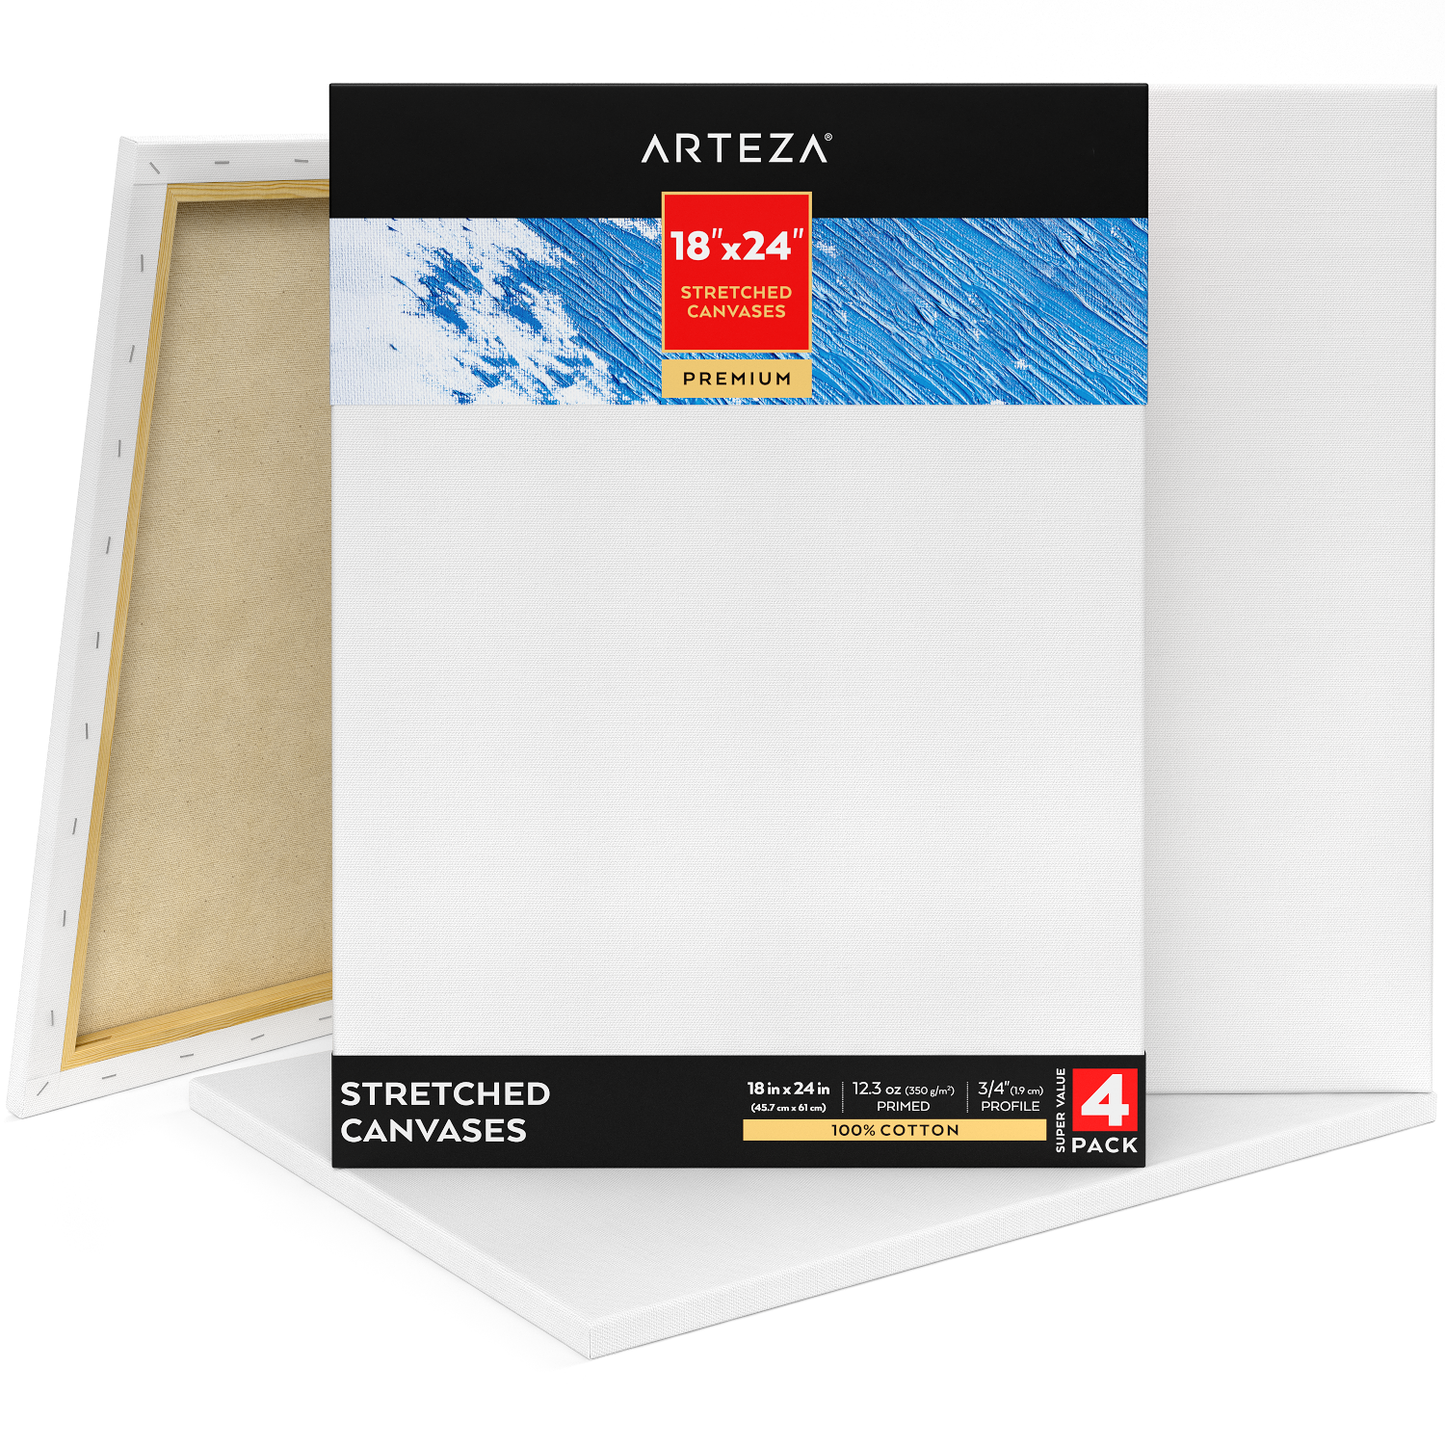 Stretched Canvas Premium 18 x 24 in - Pack of 4 | Arteza